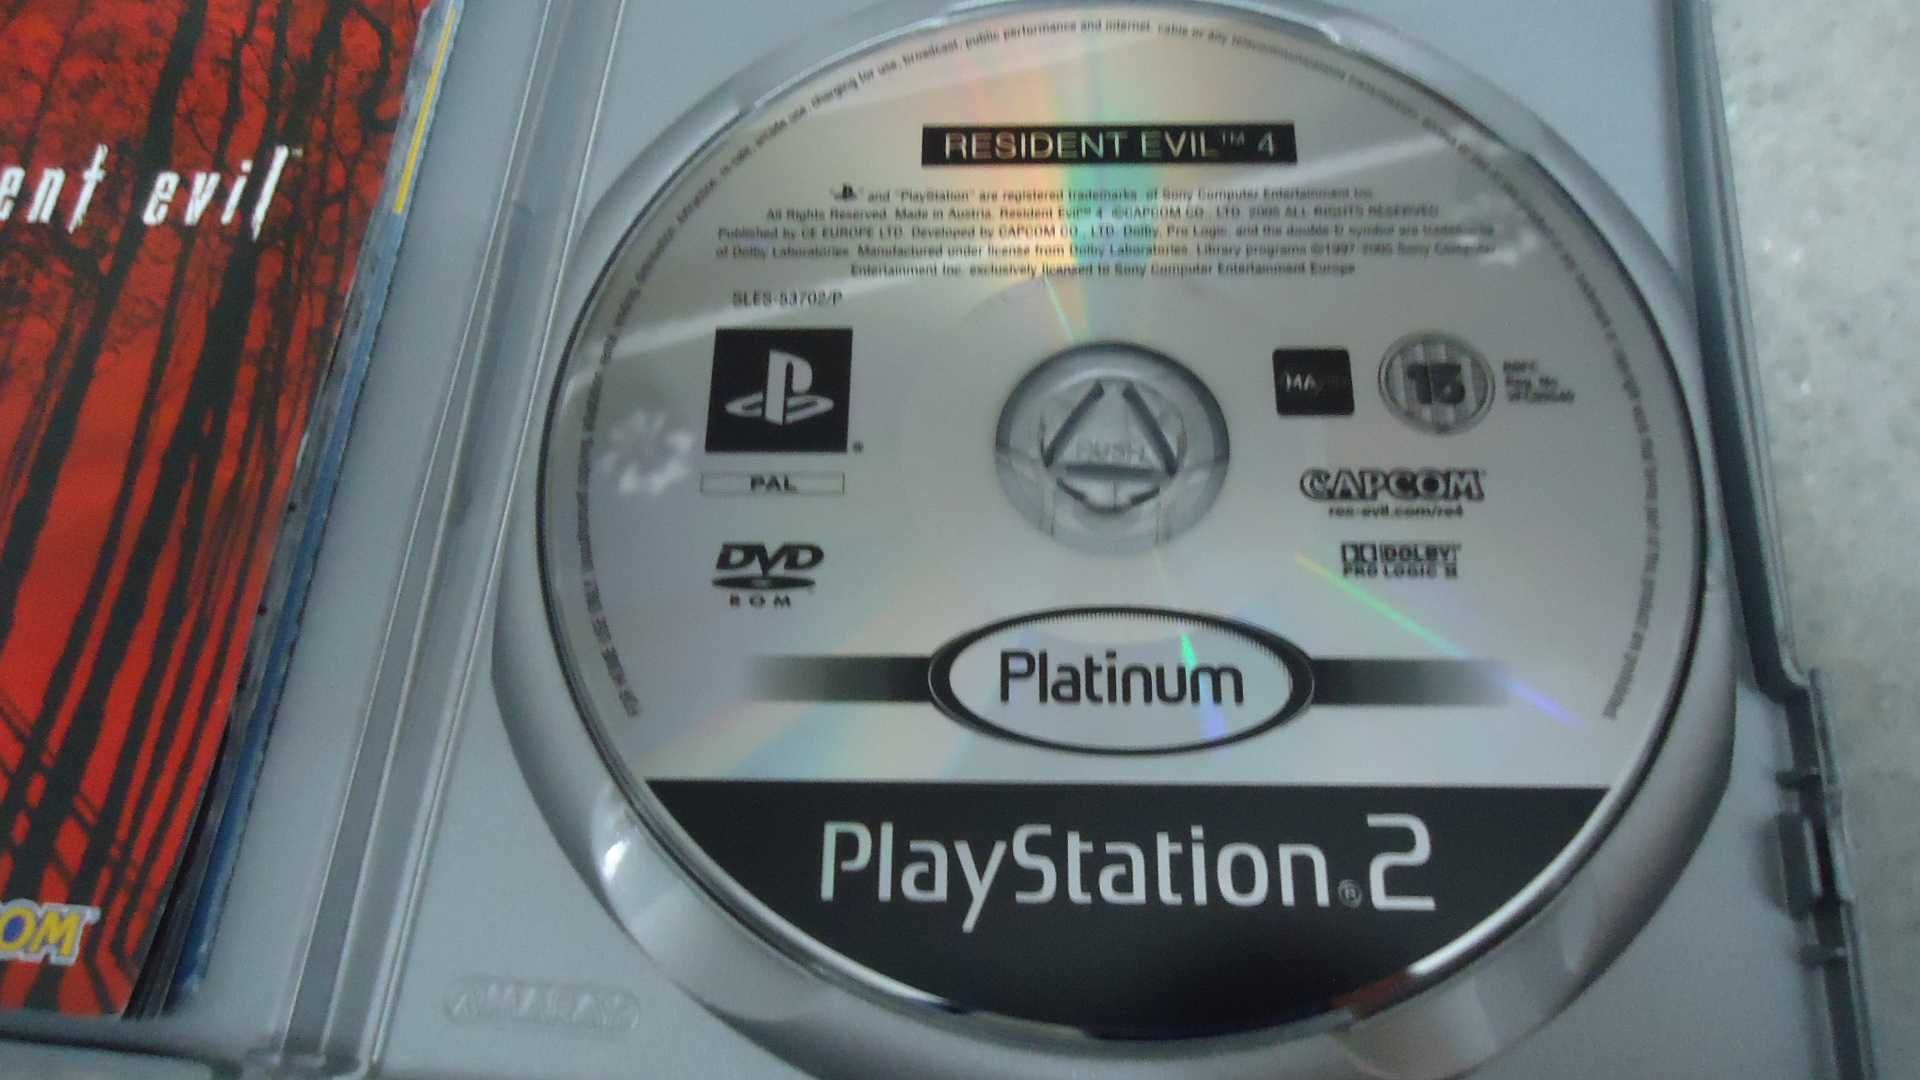 Resident Evil 4 Platinum Edition PAL PS2